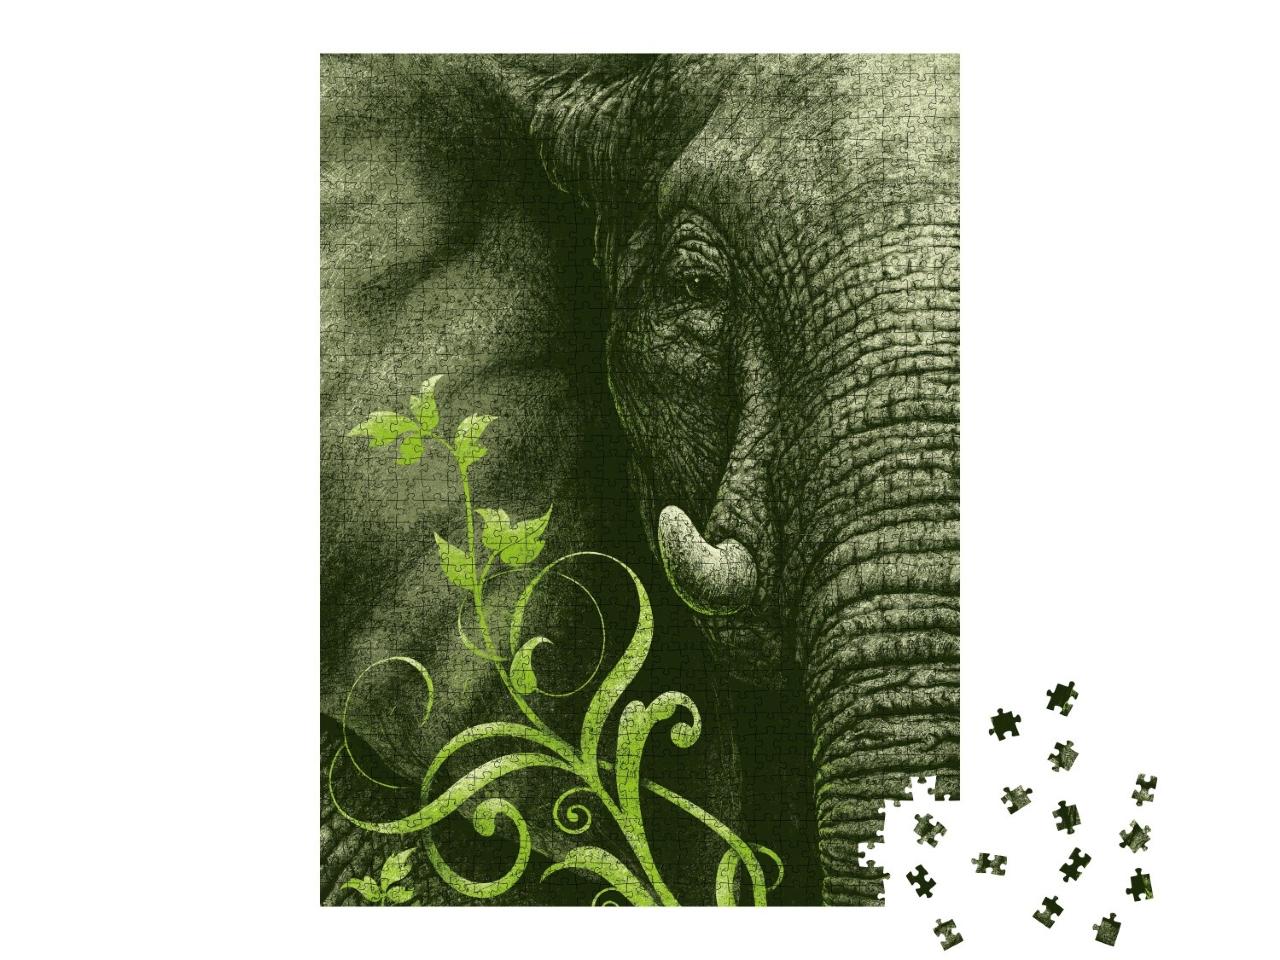 Puzzle 1000 Teile „Elefant“